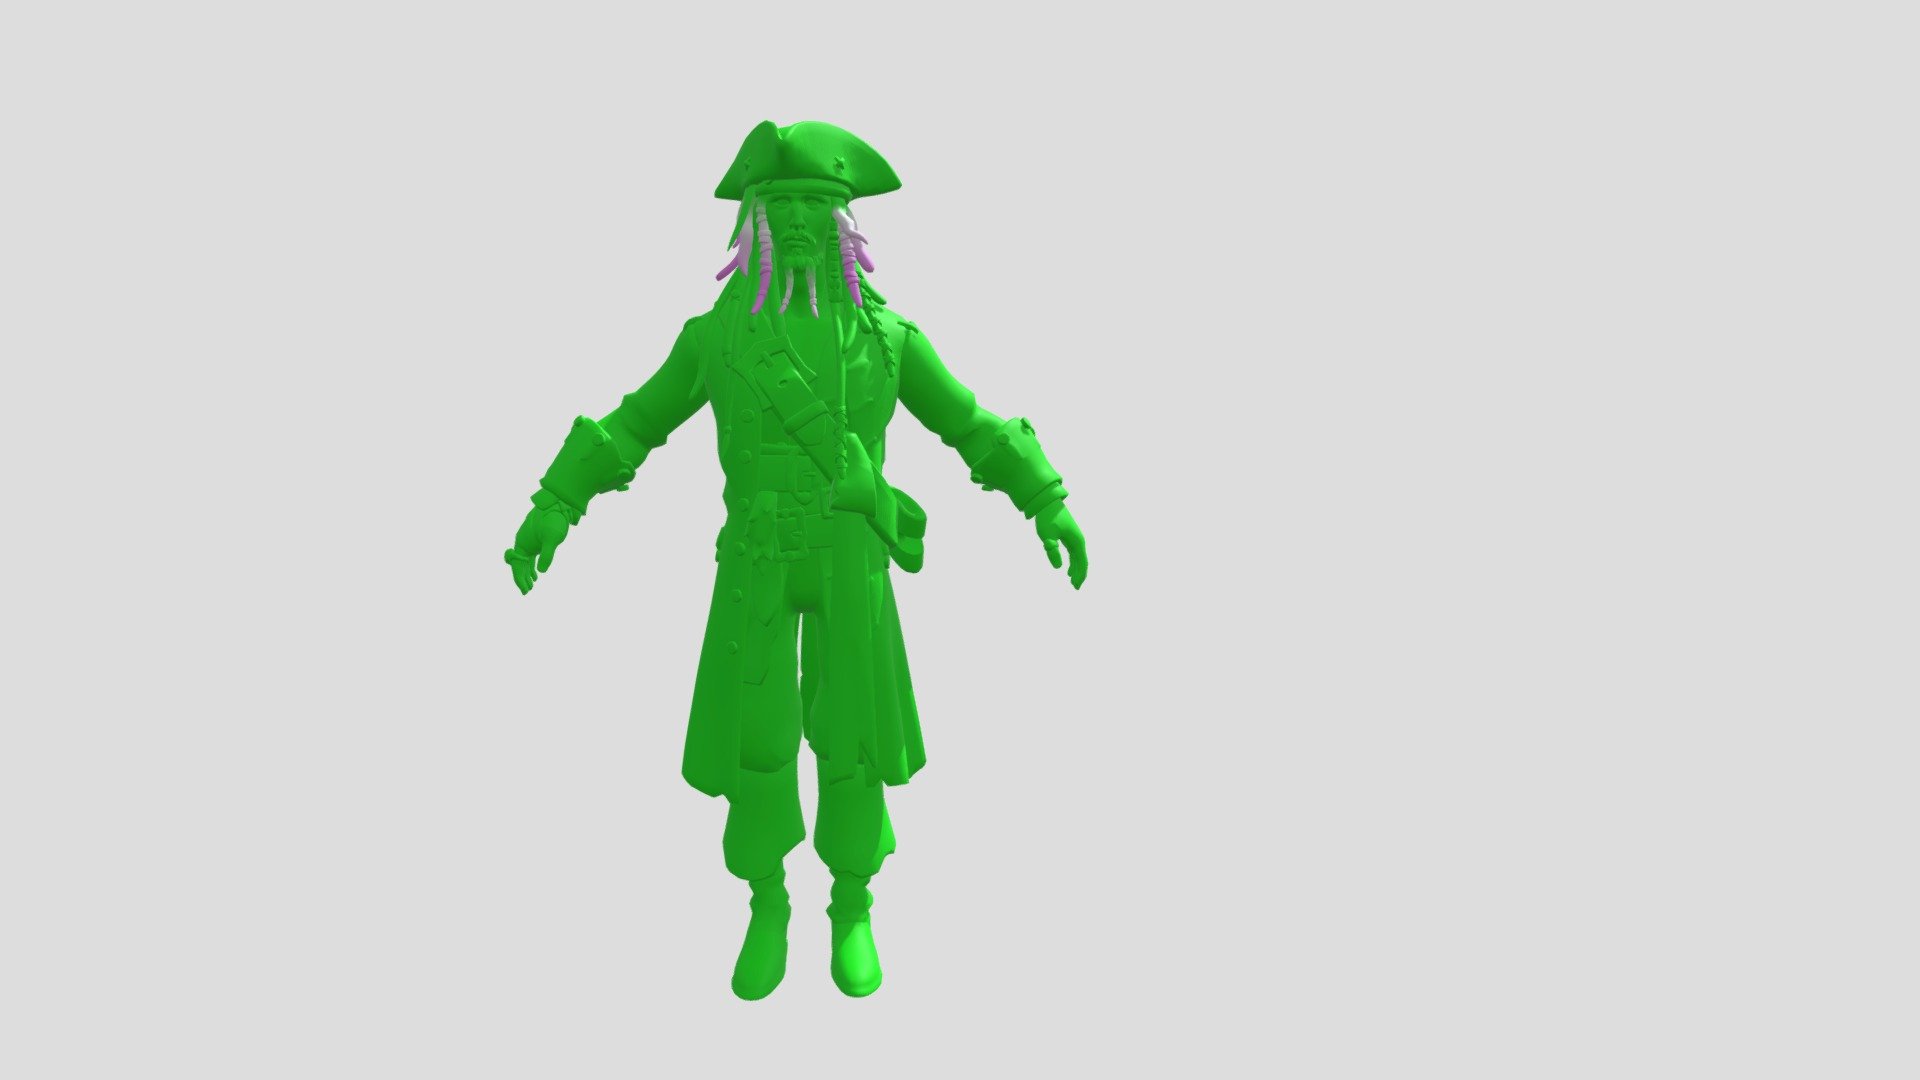 A 3D Model deisgn based on captain Jack Sparrow.

https://i.imgur.com/KyR0SVD.png

https://i.imgur.com/W0R4Ouy.png - Jack Sparrow - 3D model by RabbitHole (@rgodowntherabbithole) 3d model